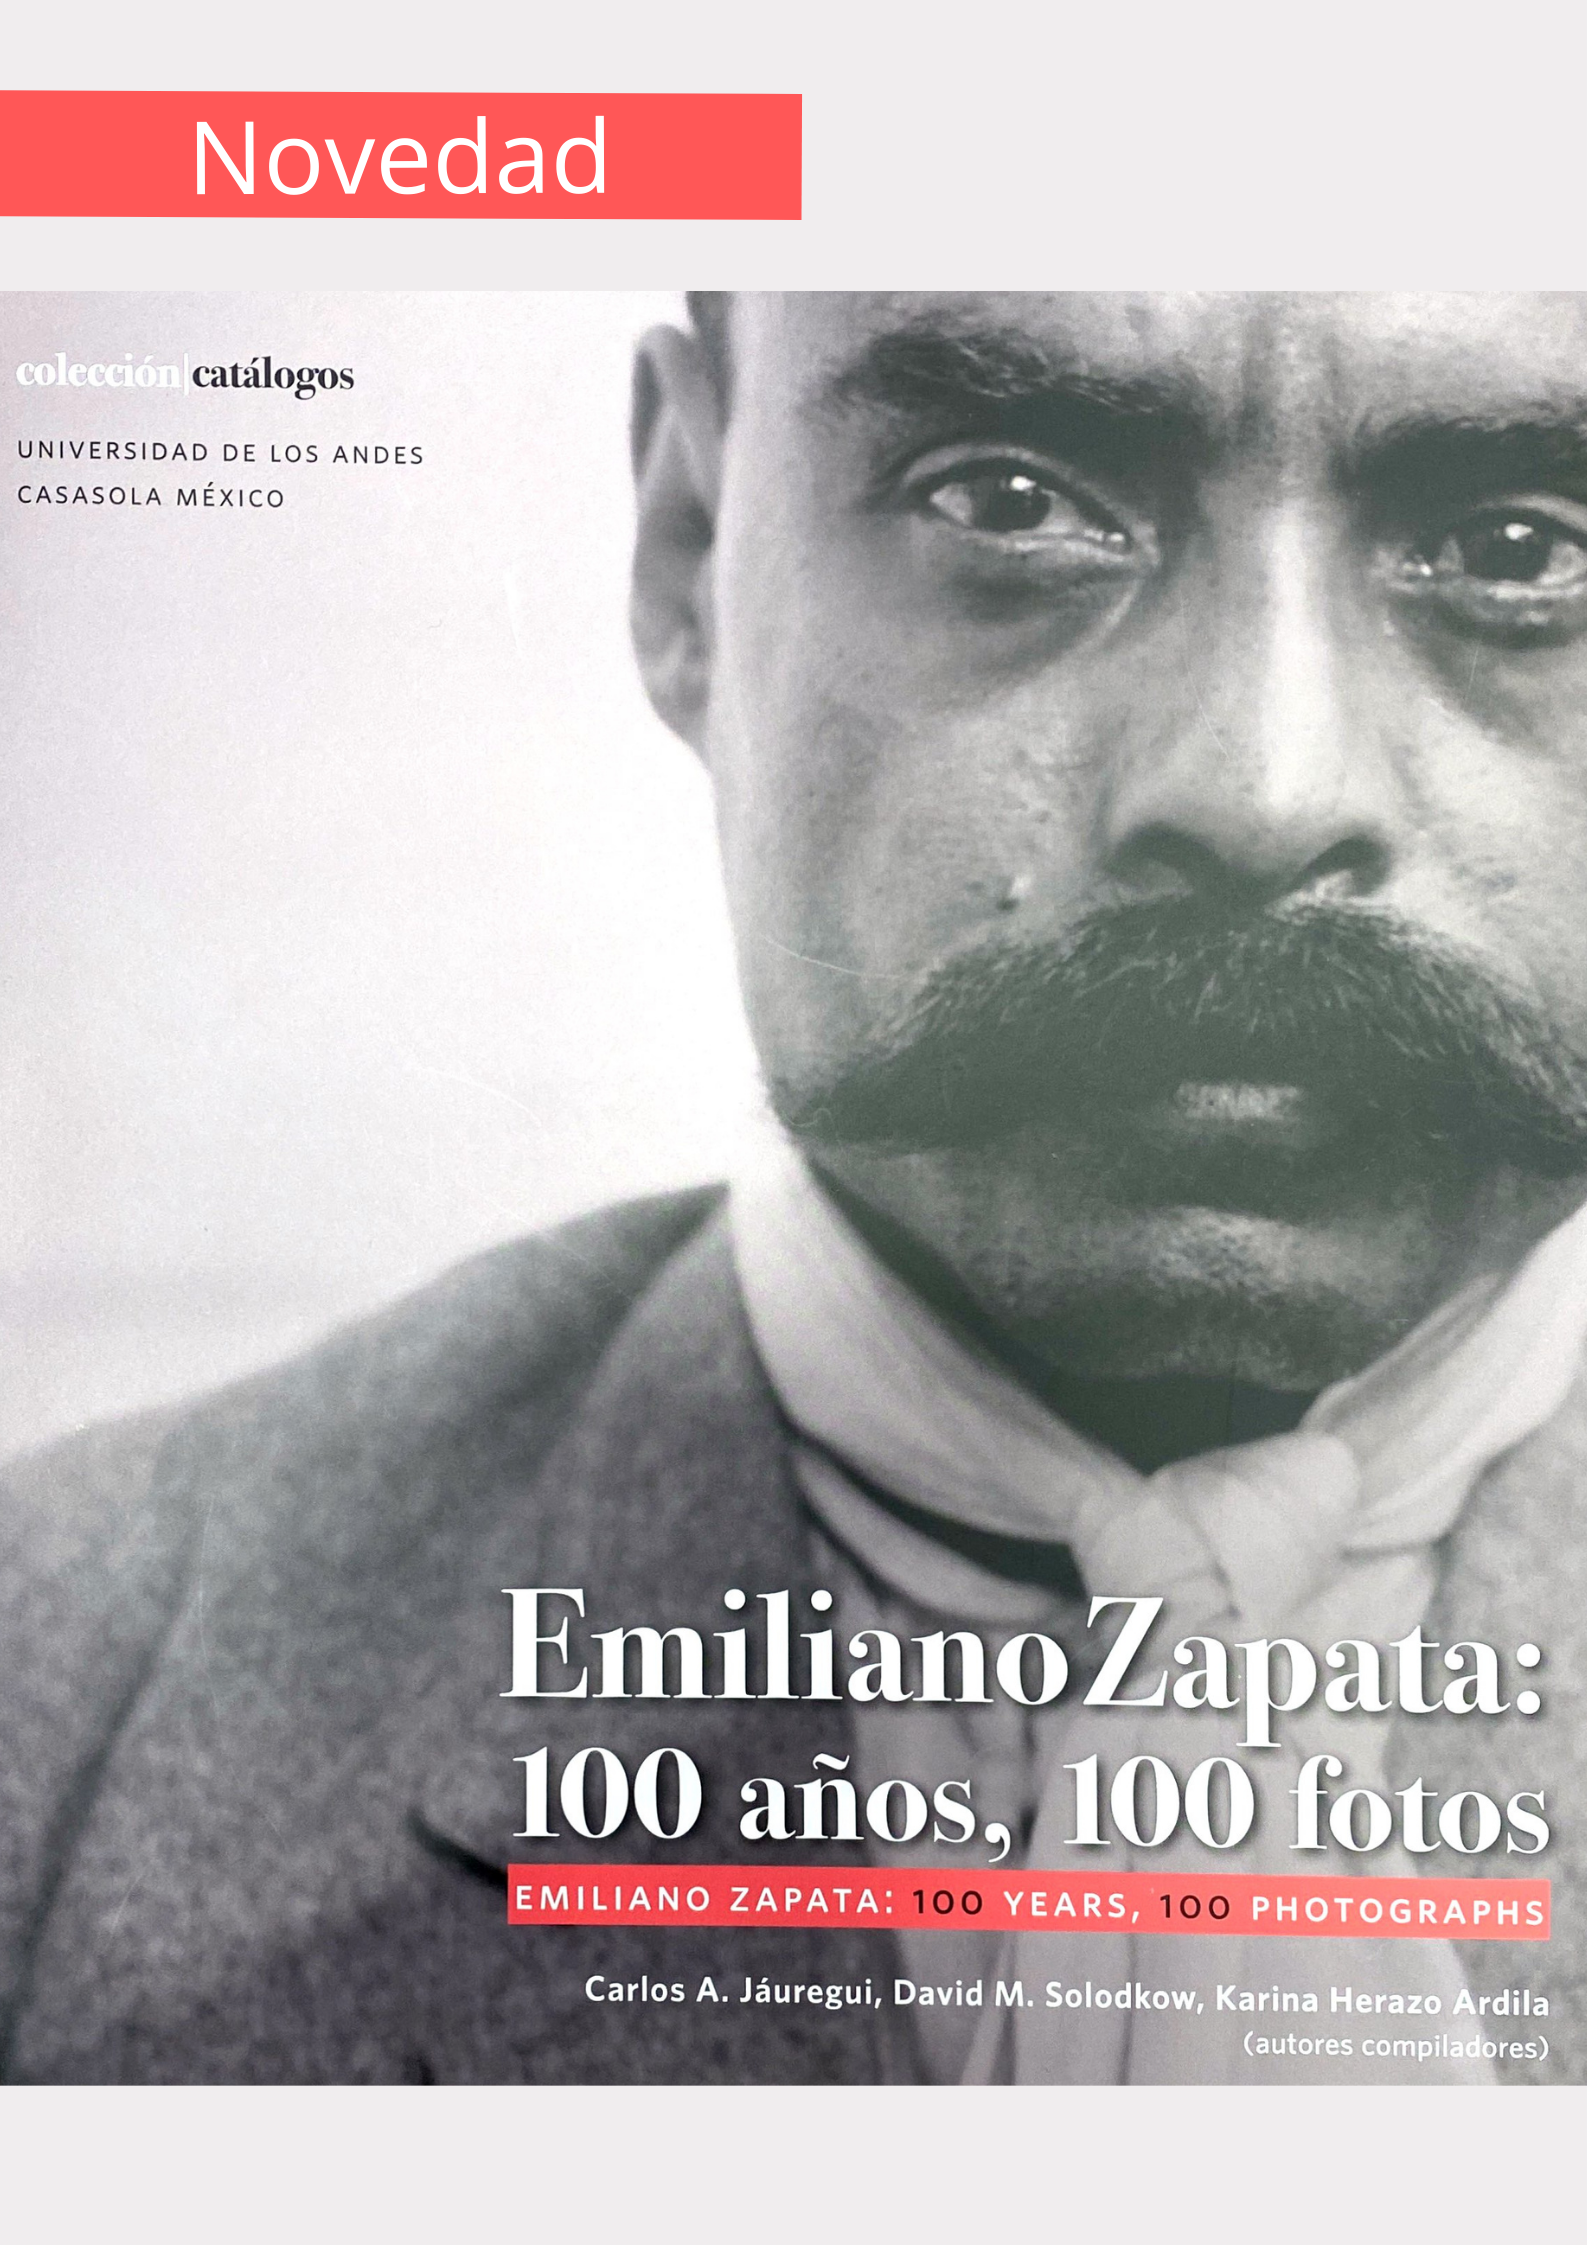 Emiliano Zapata: 100 años, 100 fotos / Emiliano Zapata: 100 years, 100 photographs